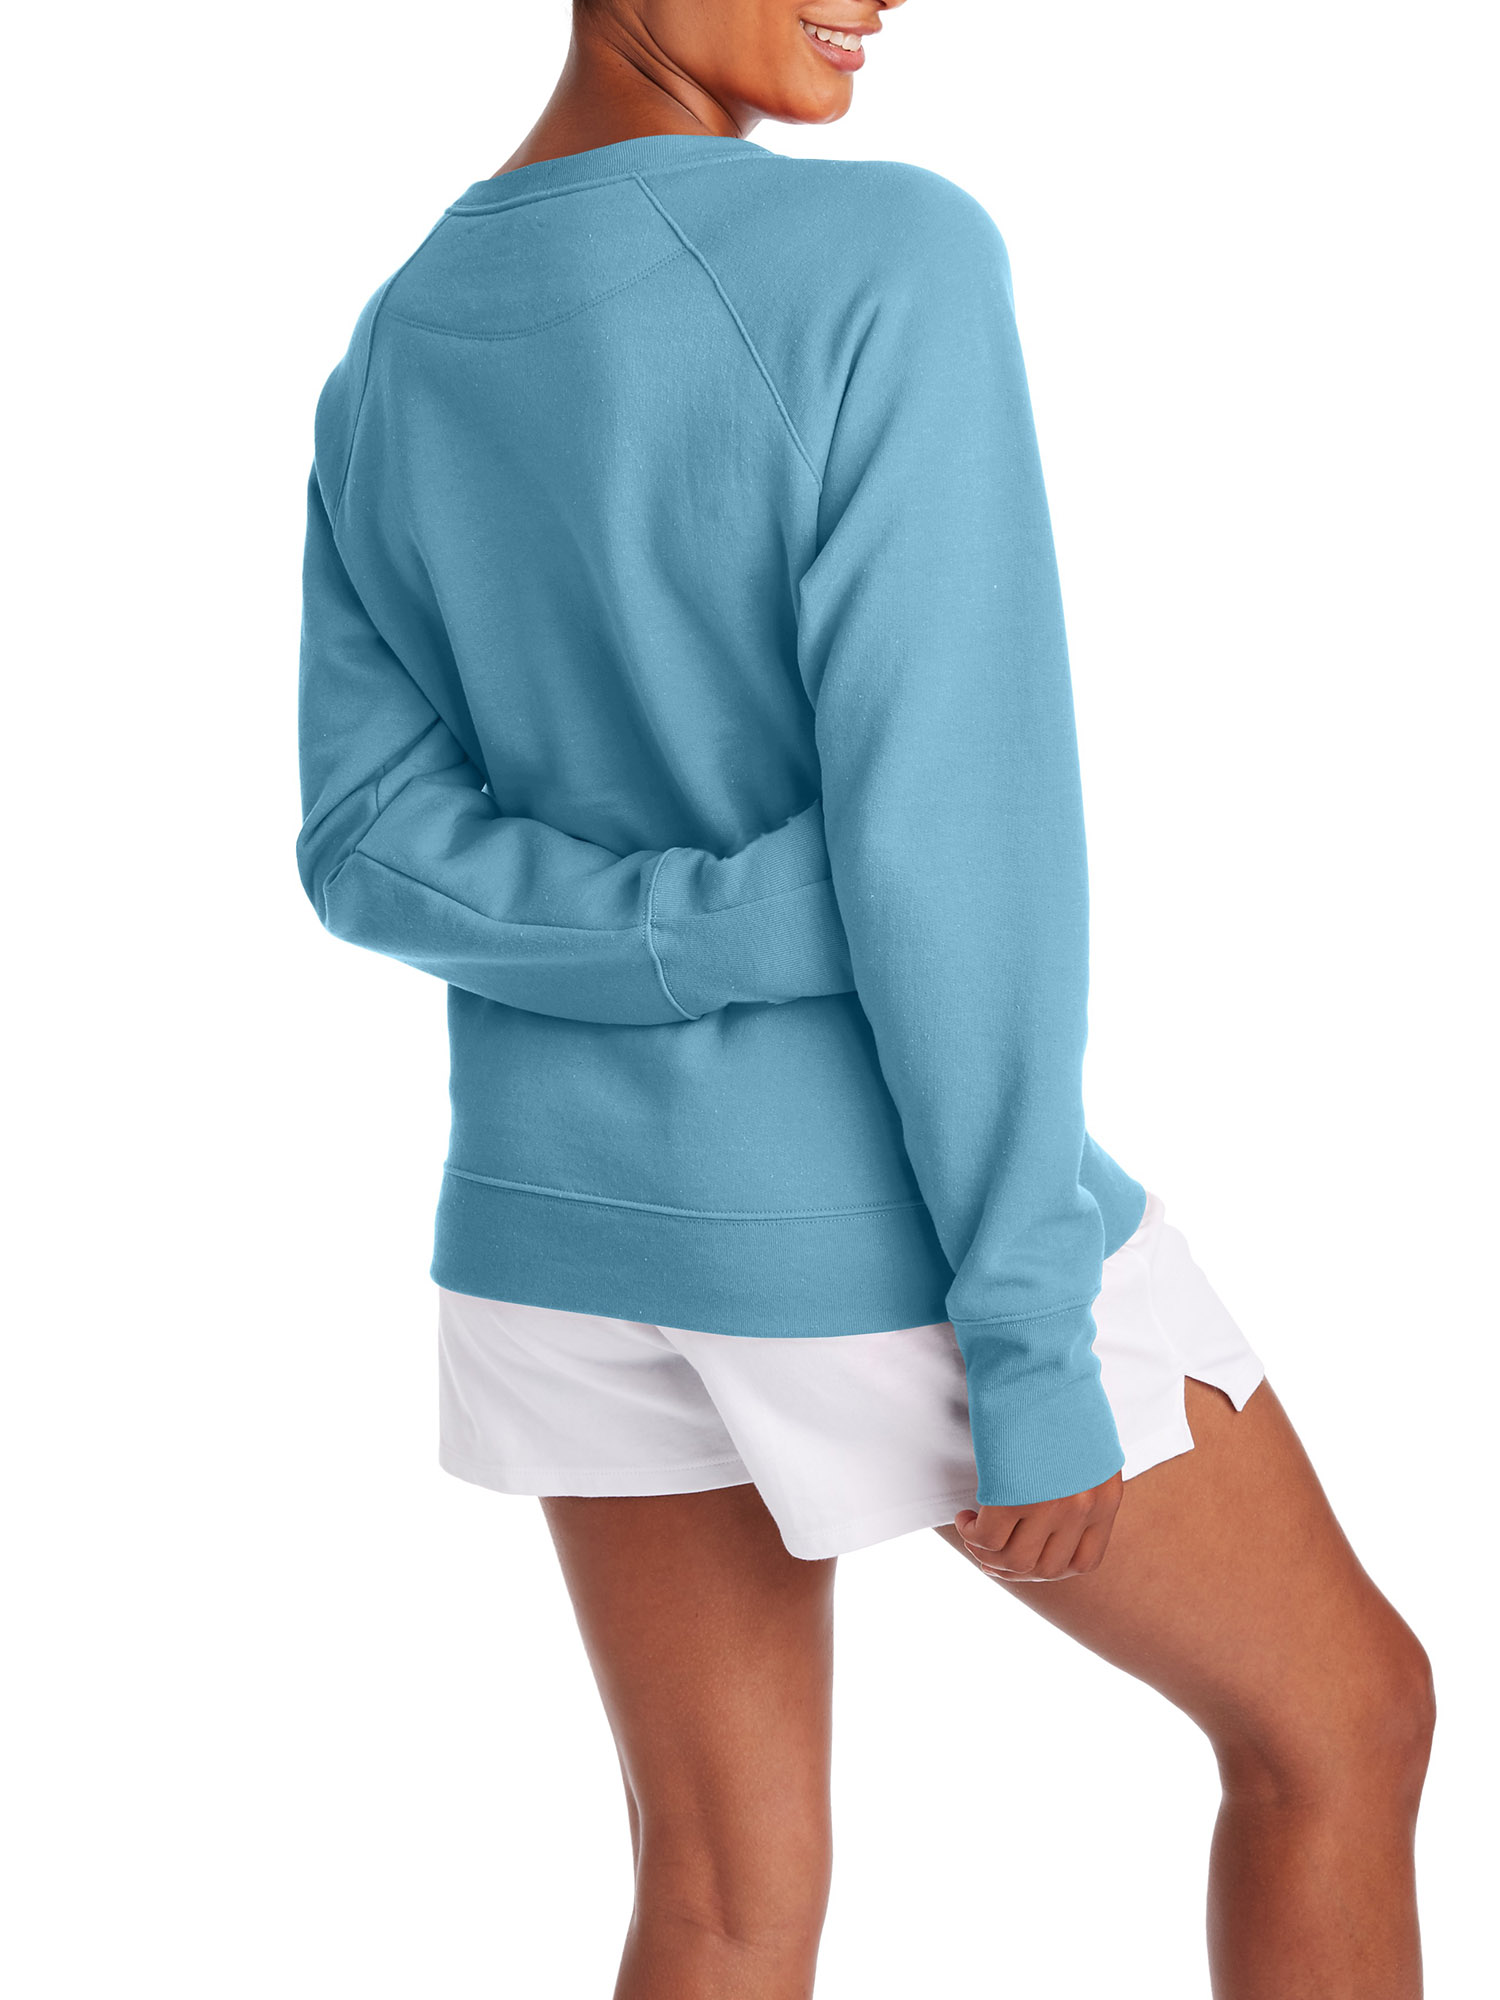 Champion Women's Powerblend Graphic Fleece Boyfriend Crewneck Sweatshirt - image 4 of 5